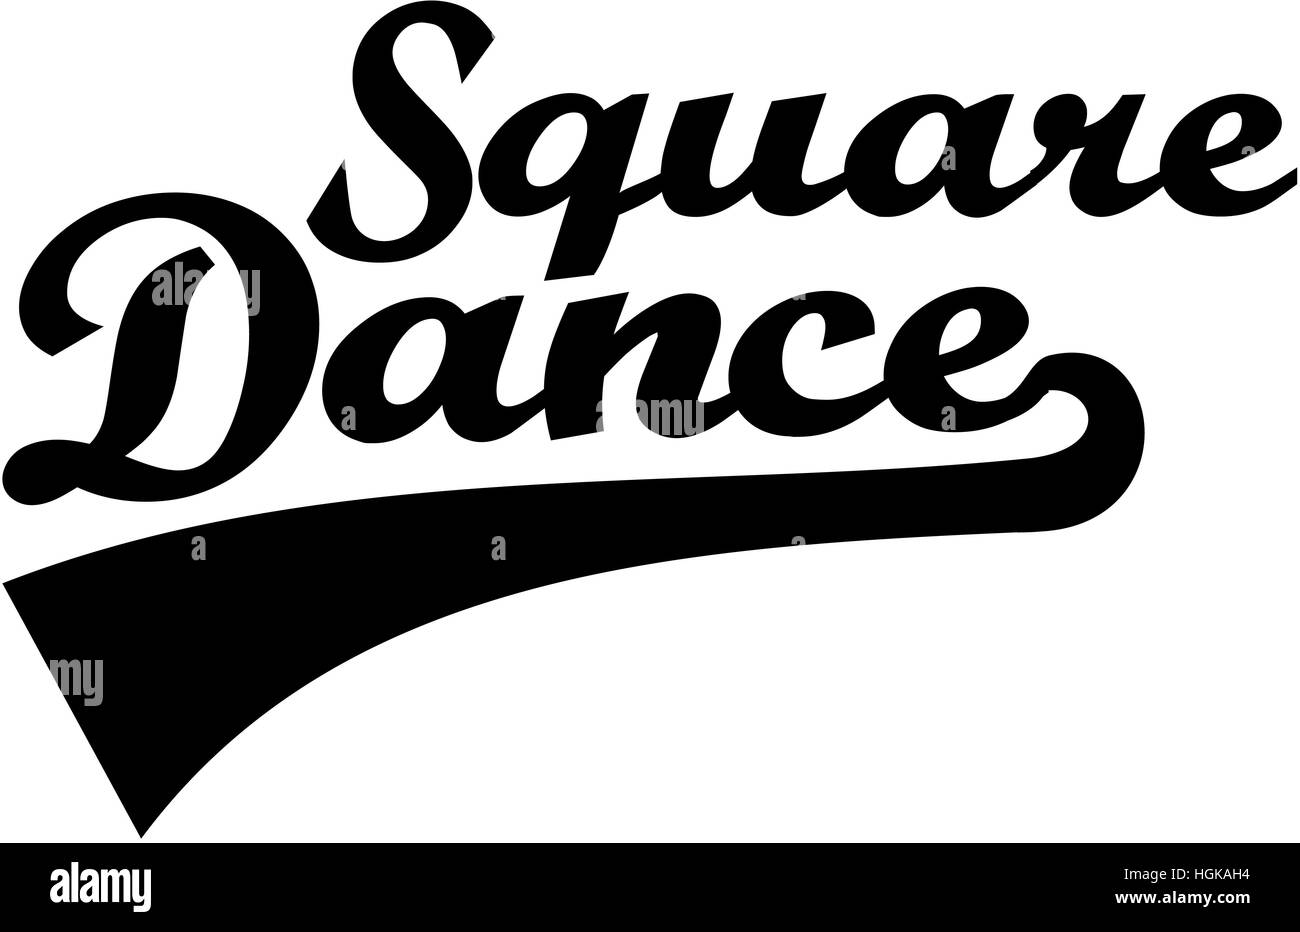 Square Dance Retro-Wort Stockfoto